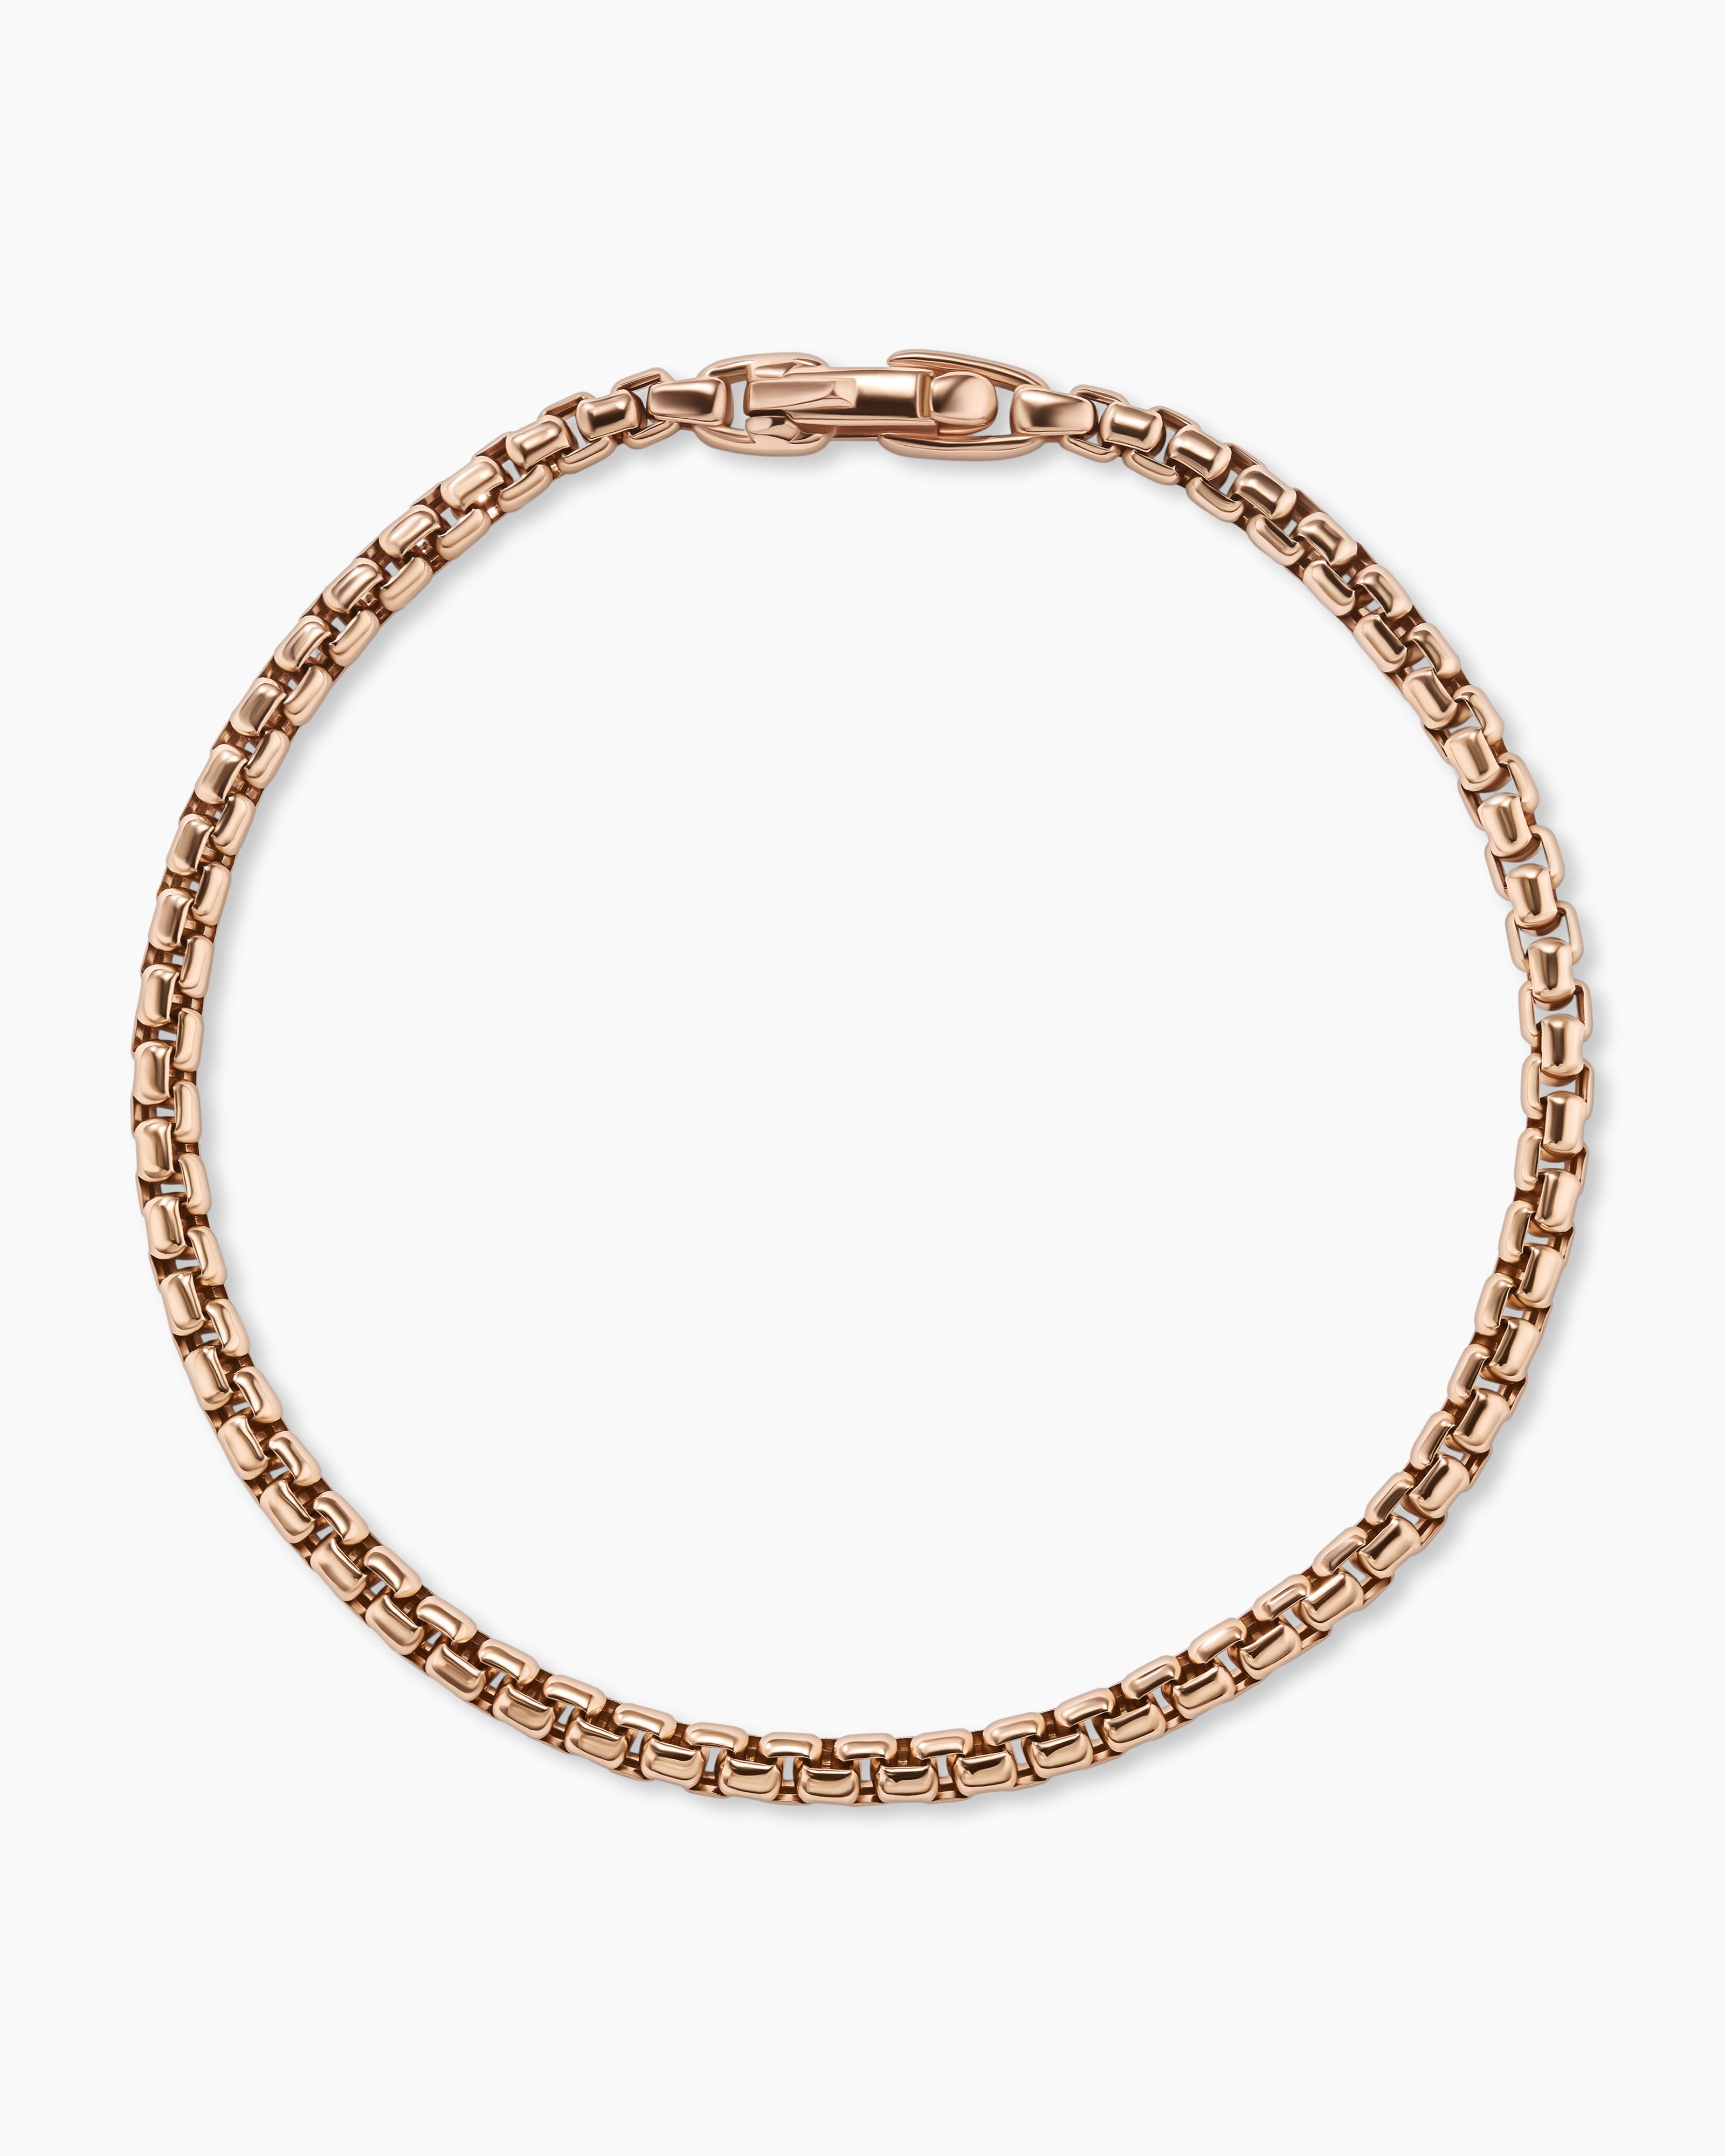 Fiji Chain Bracelet in 18ct Rose Gold Vermeil On Sterling Silver |  Jewellery by Monica Vinader